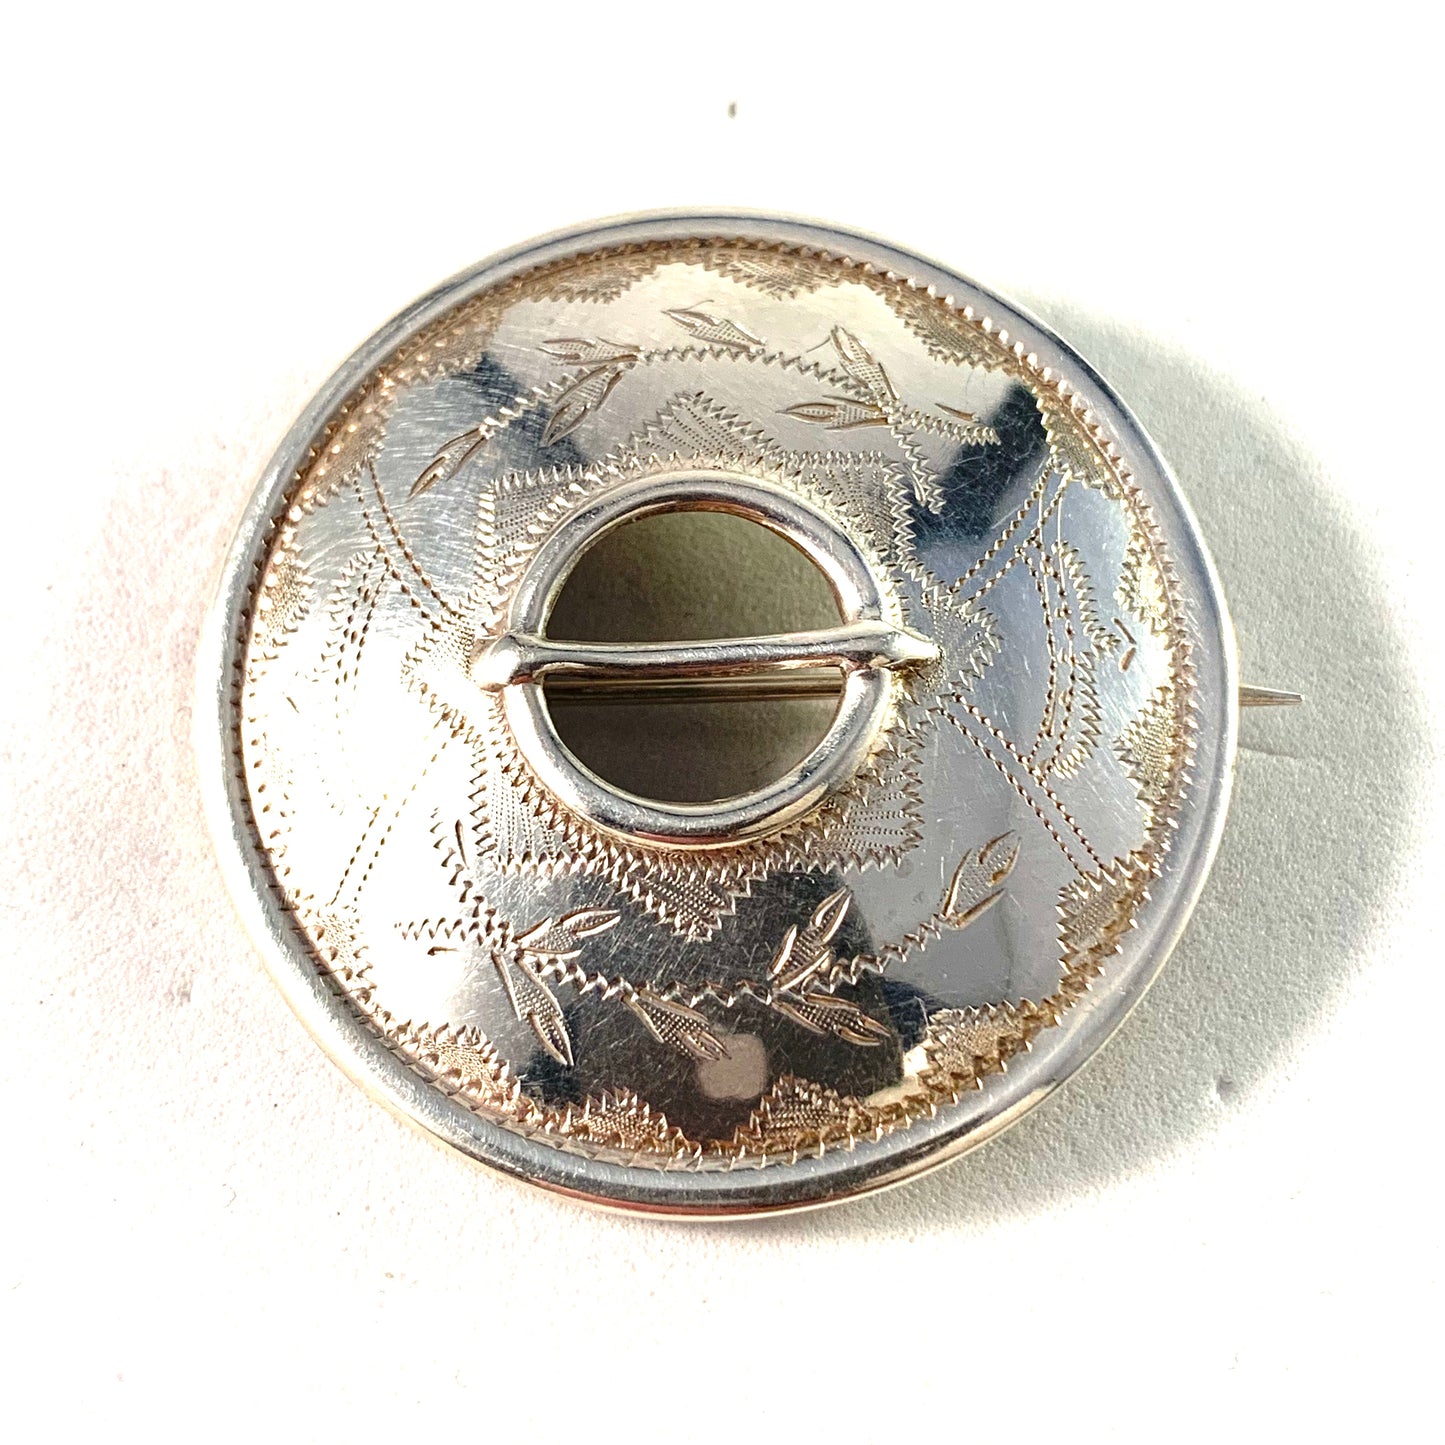 E.A.Rasi, Finland 1974 Vintage Silver Traditional Shield Brooch